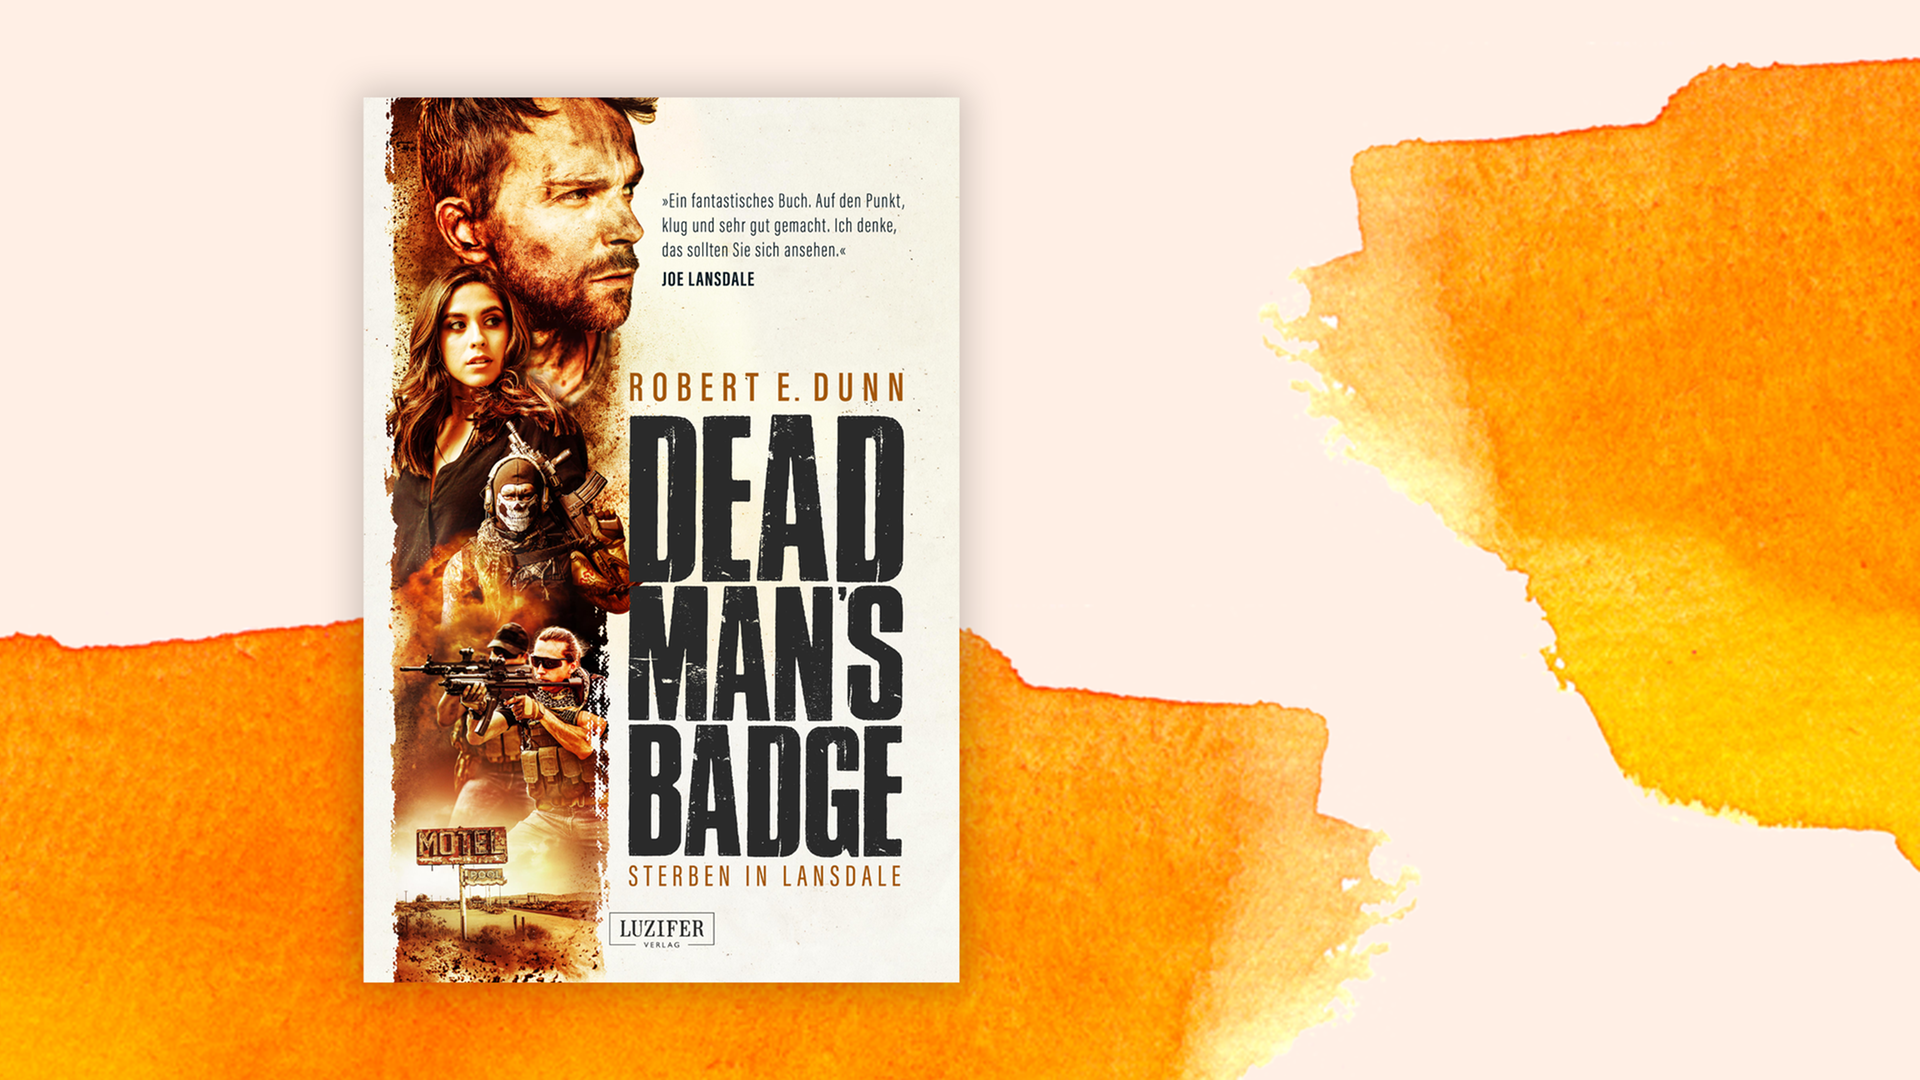 Cover von Robert E. Dunn: "Dead Man's Badge" vor Aquarell-Hintergrund